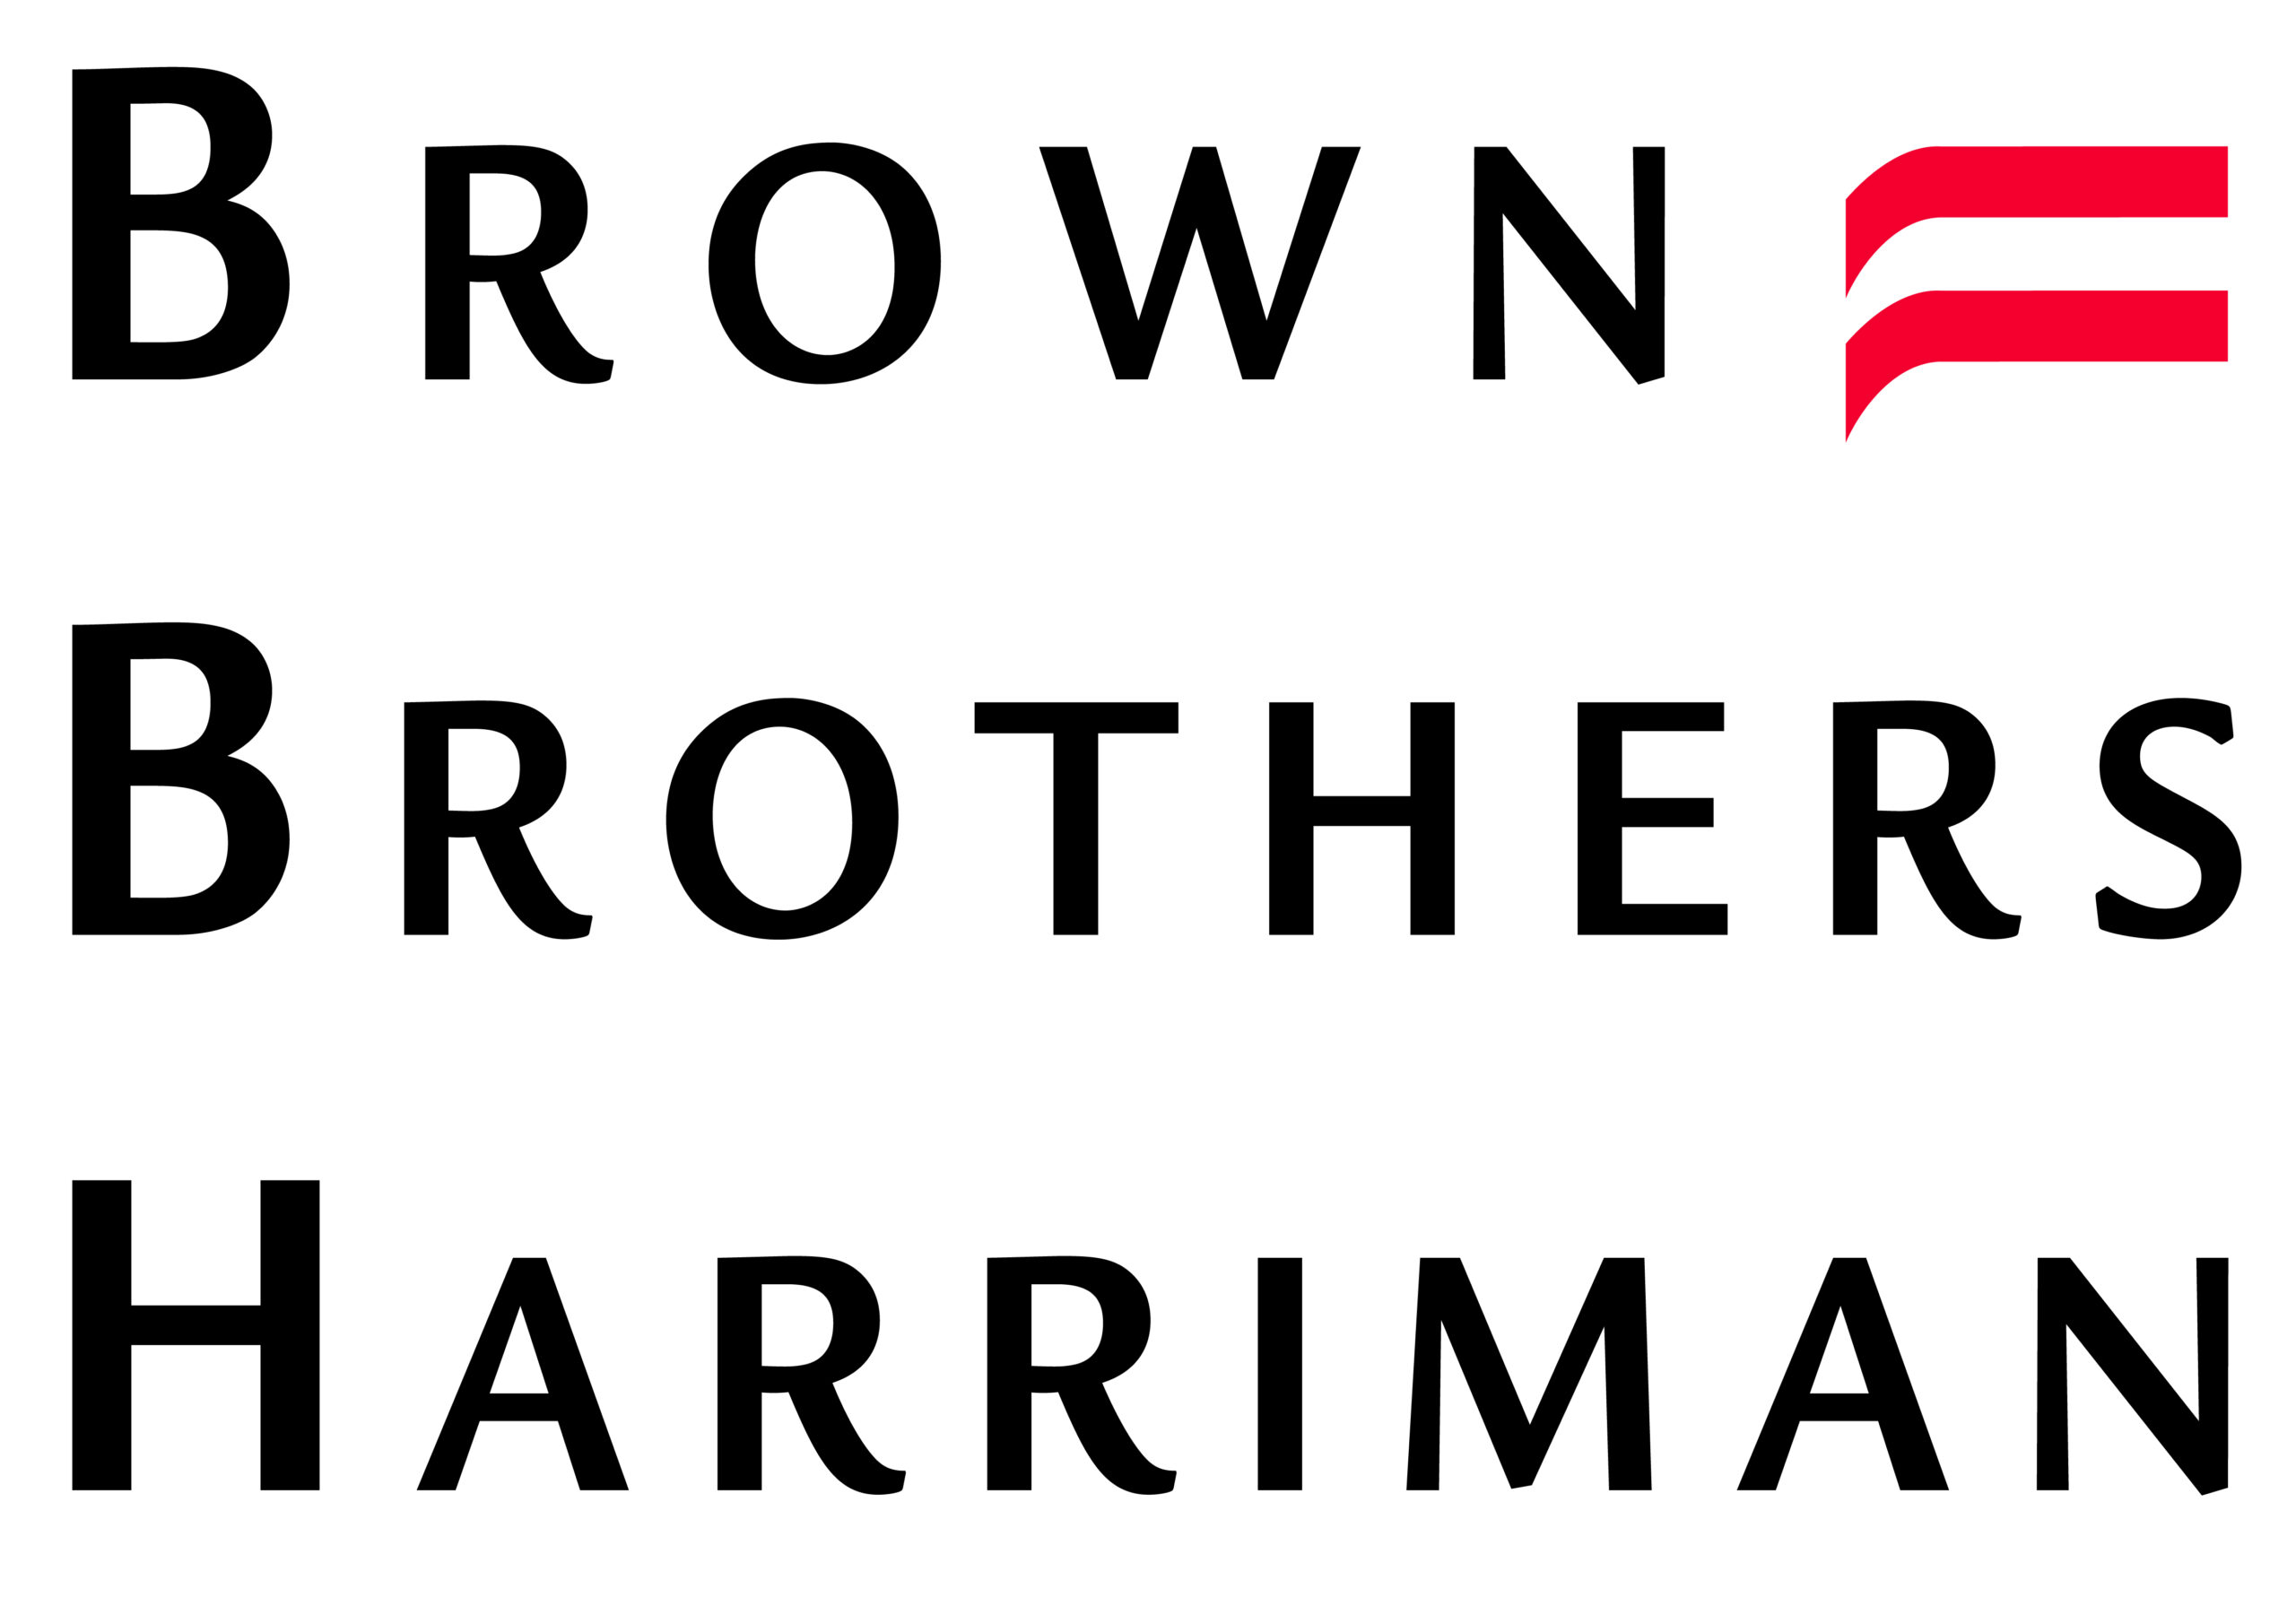 Brown Brothers Harriman & Co.